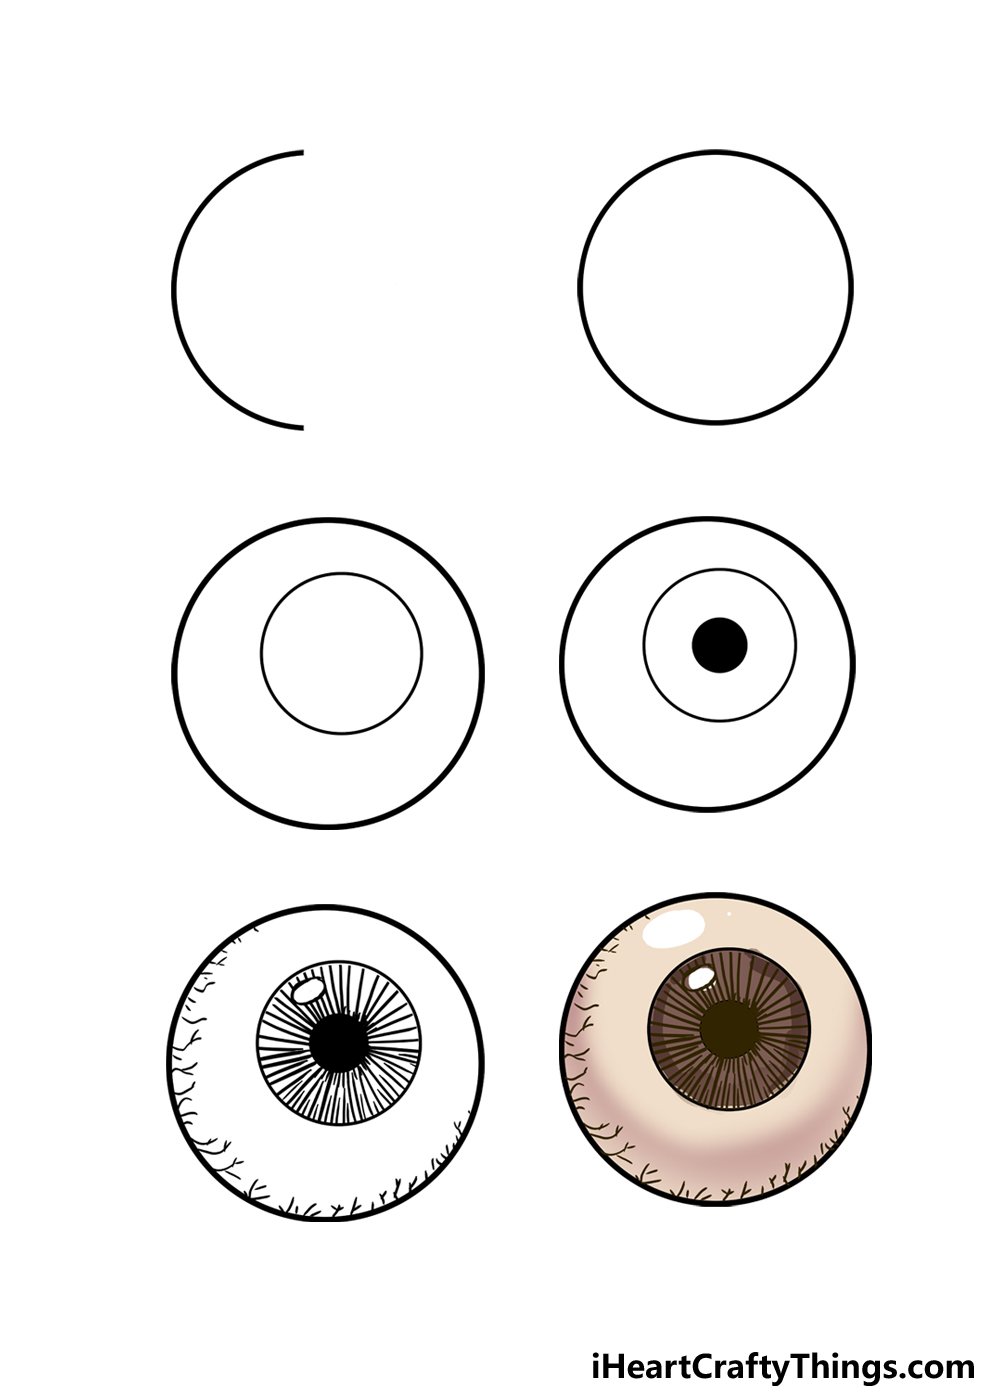 How to Draw An Eyeball